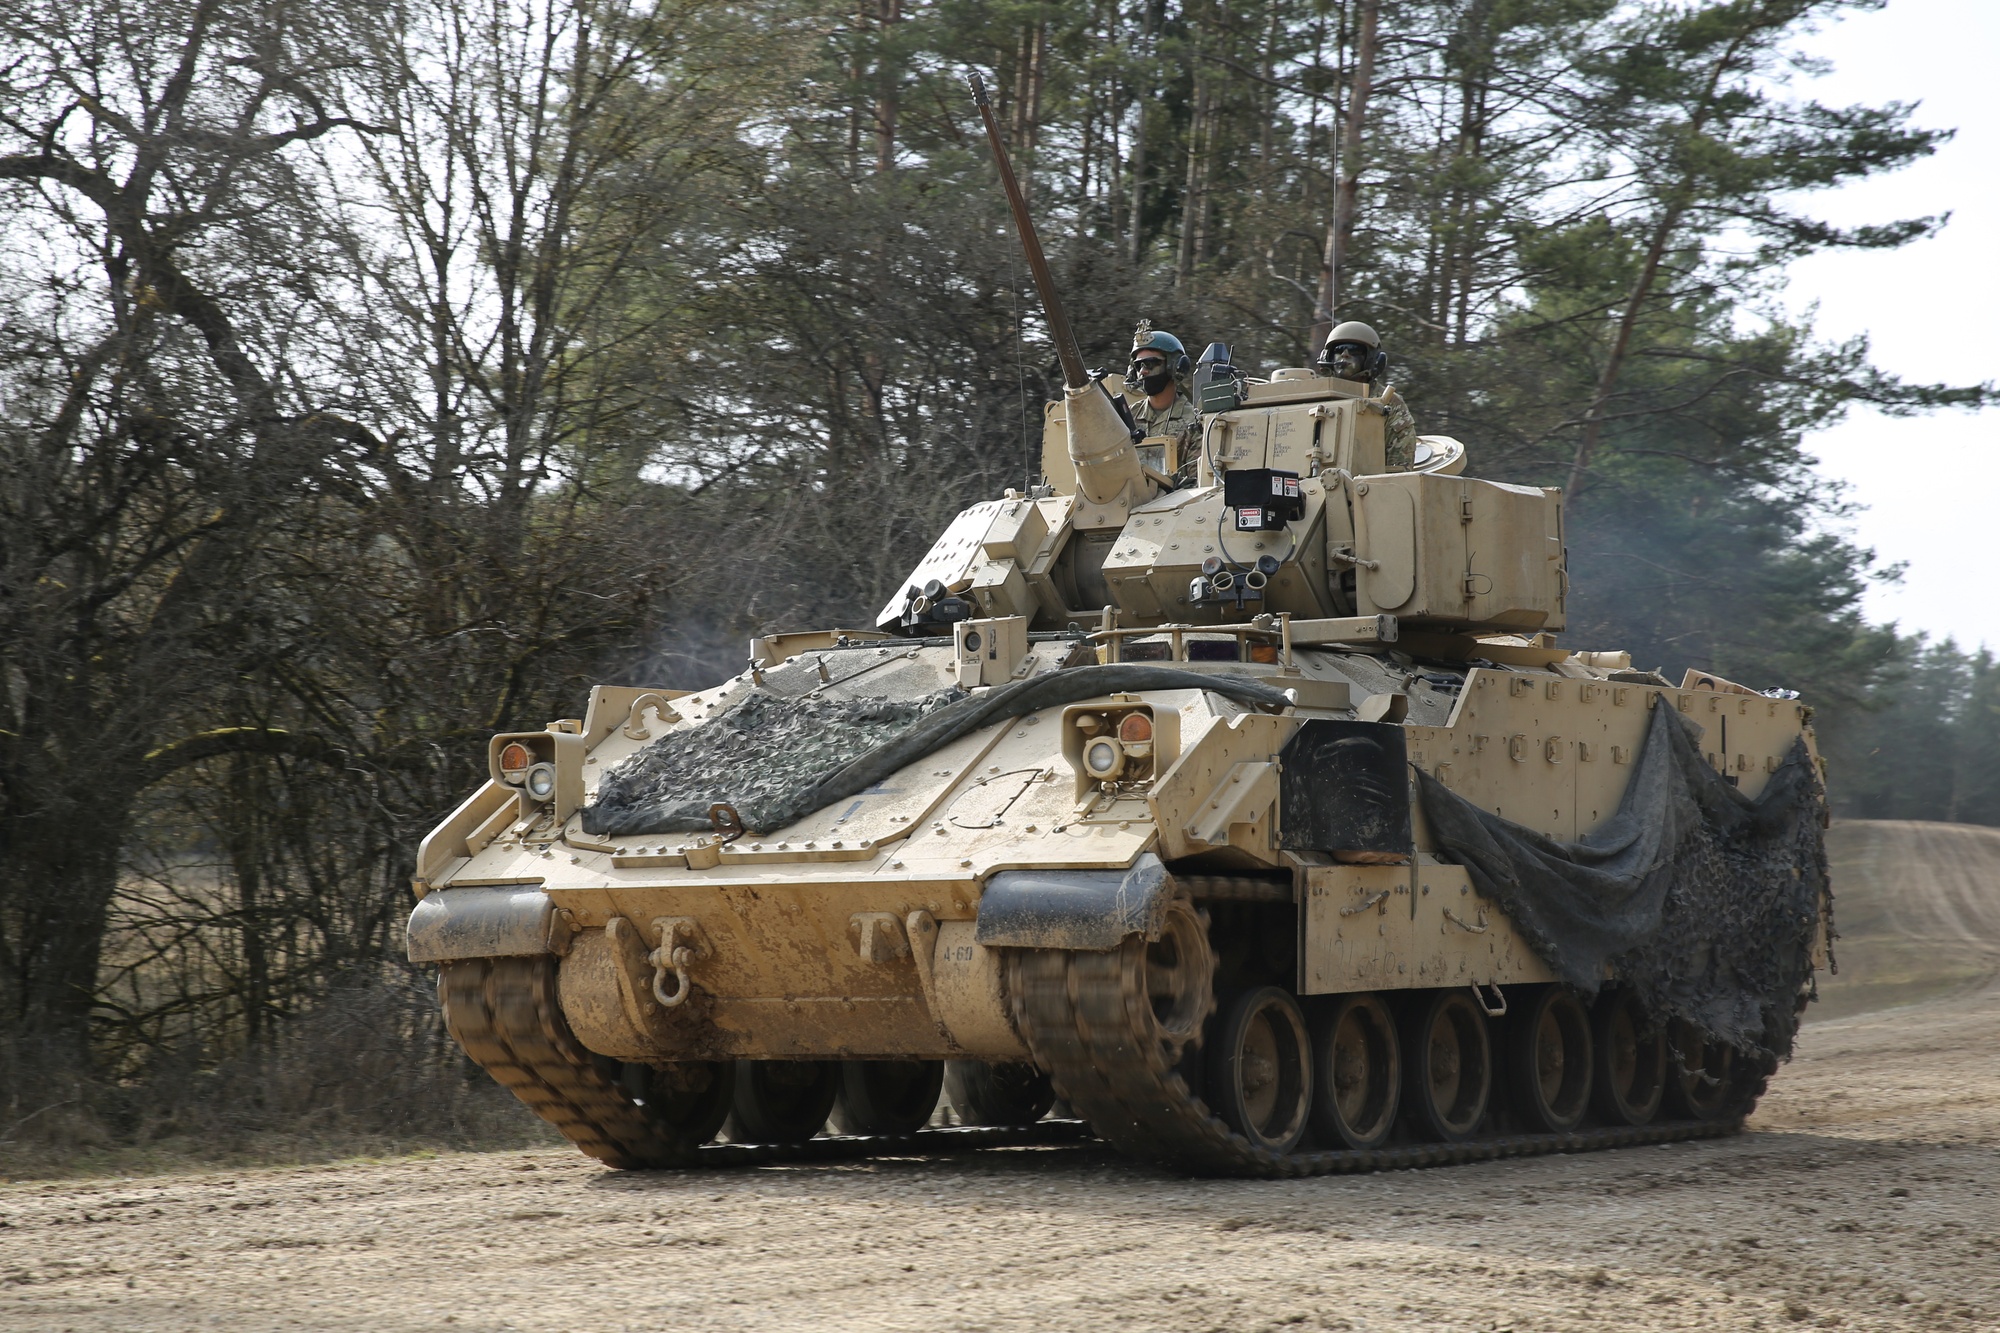 DVIDS - Images - M2 Bradley Fighting Vehicle Patrol [Image 1 of 5]